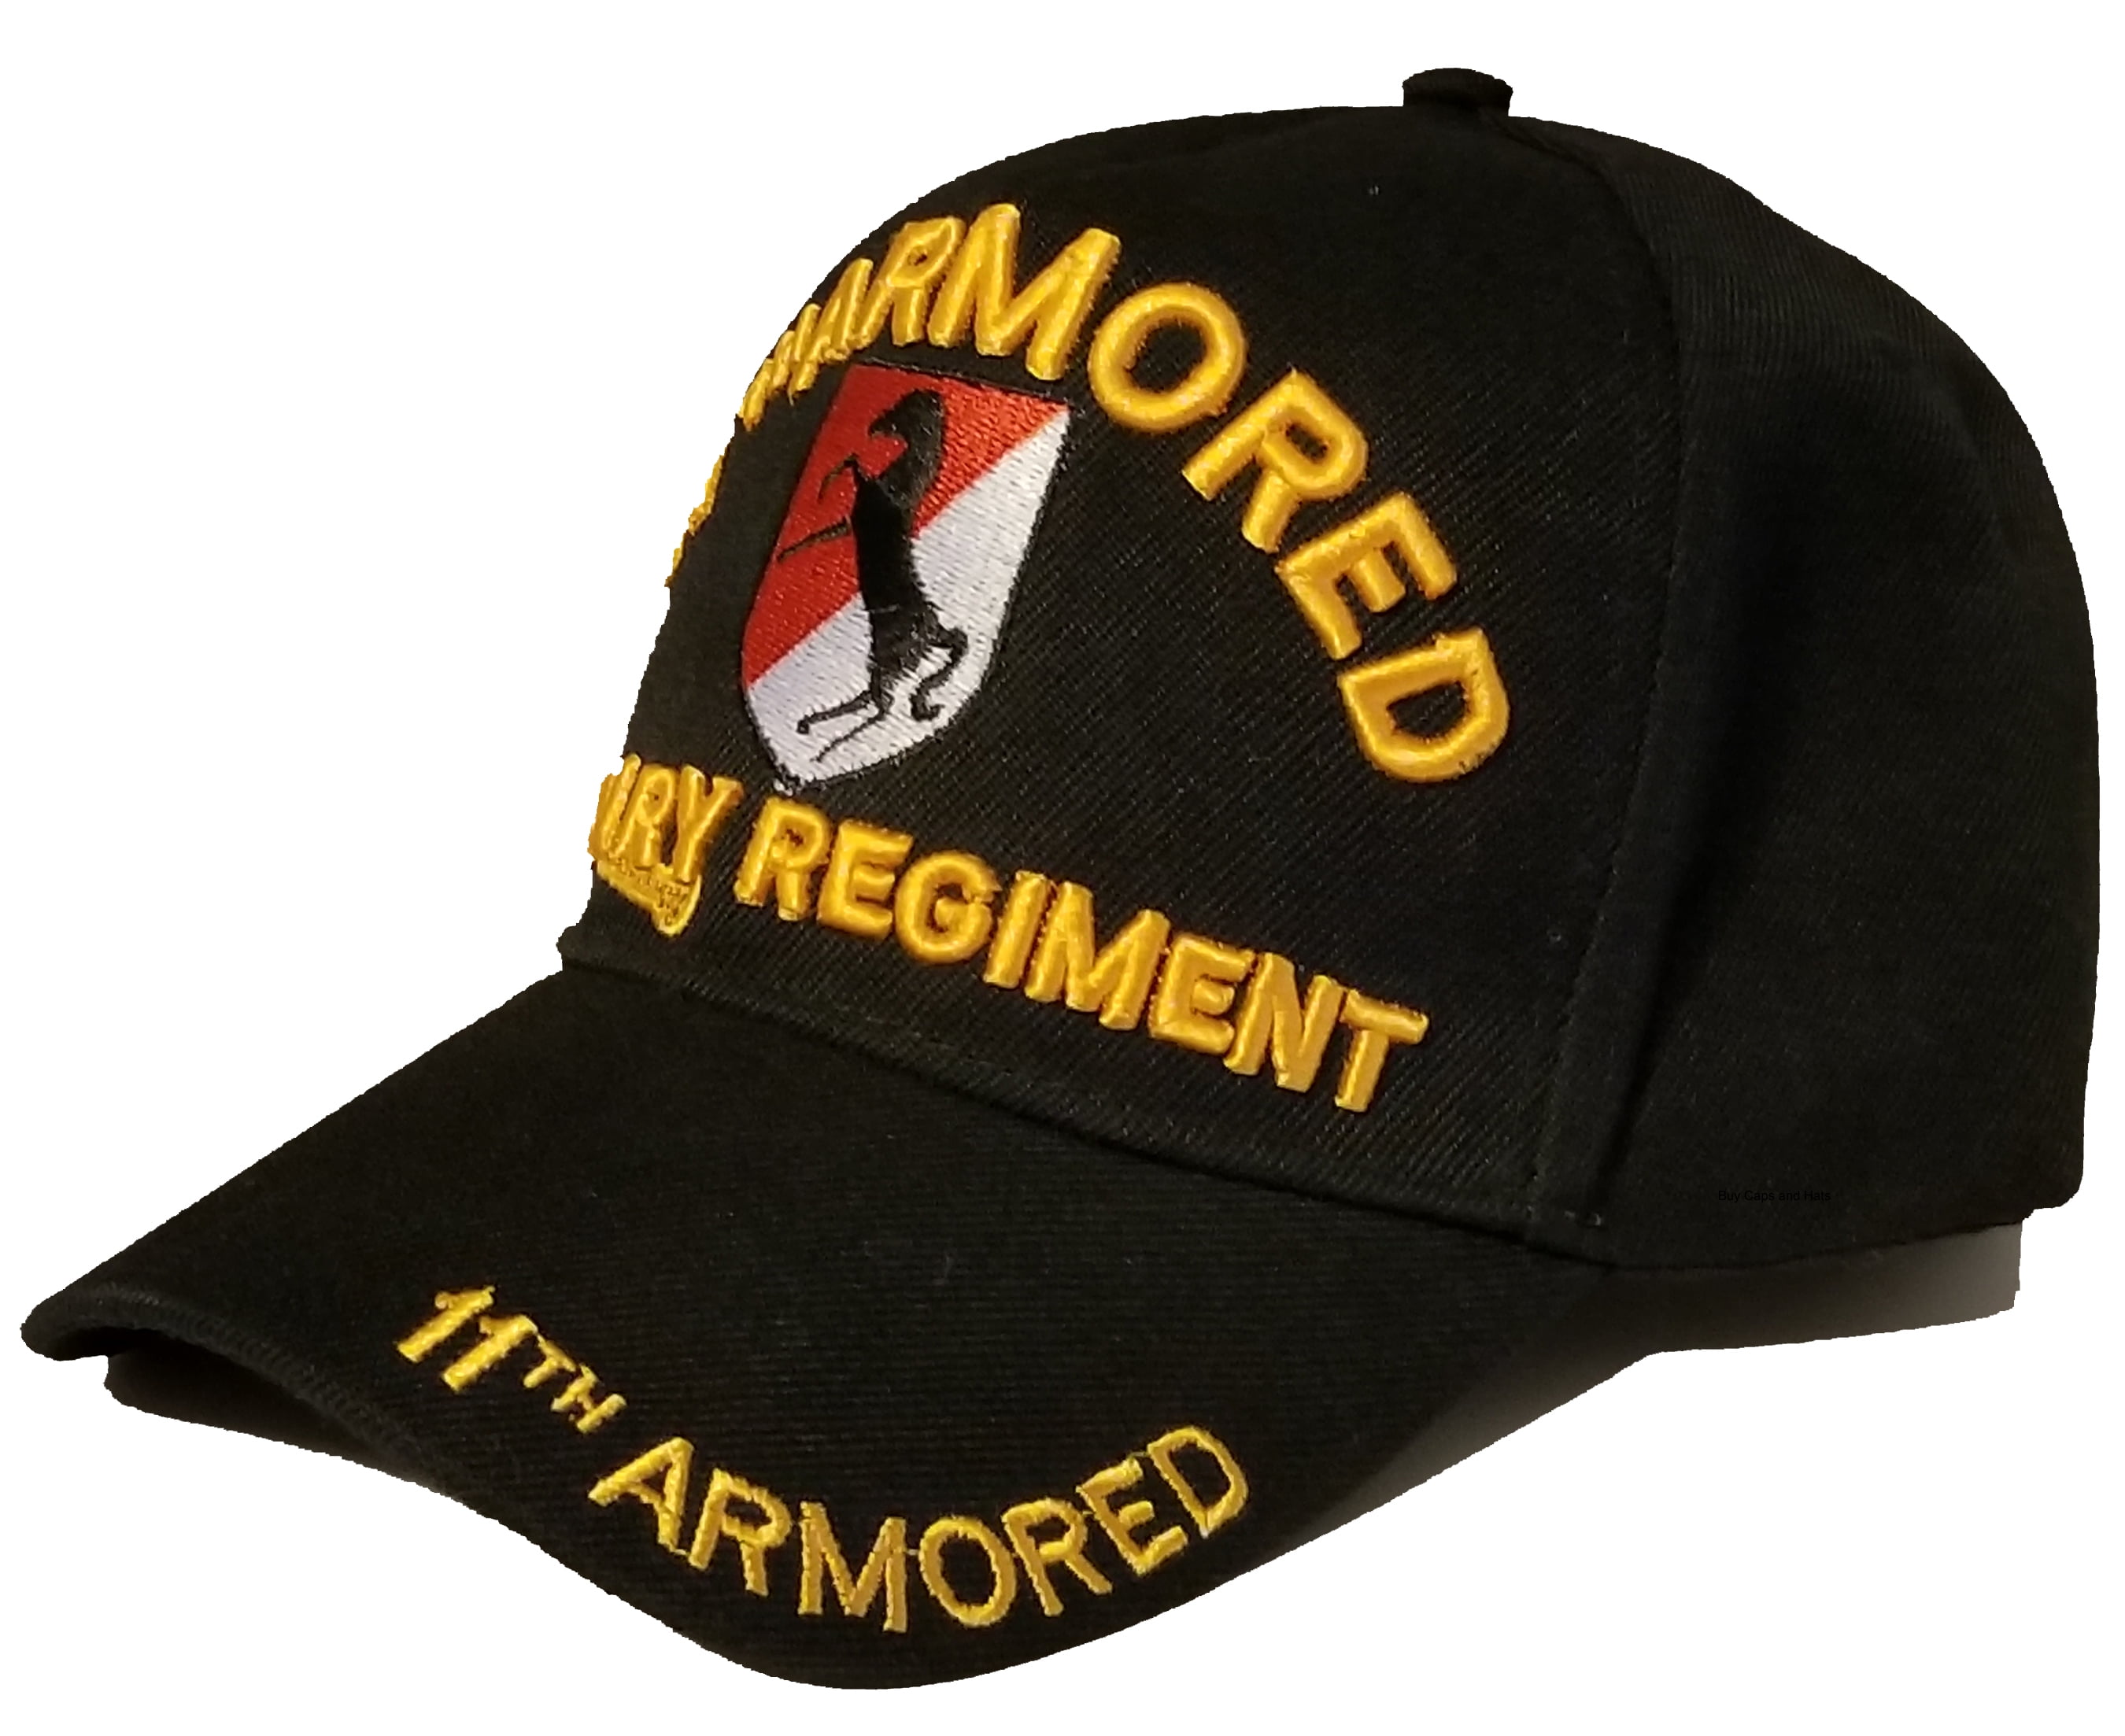 Adjustable Sandwich Hats Baseball Cap 15th Cavalry Regiment